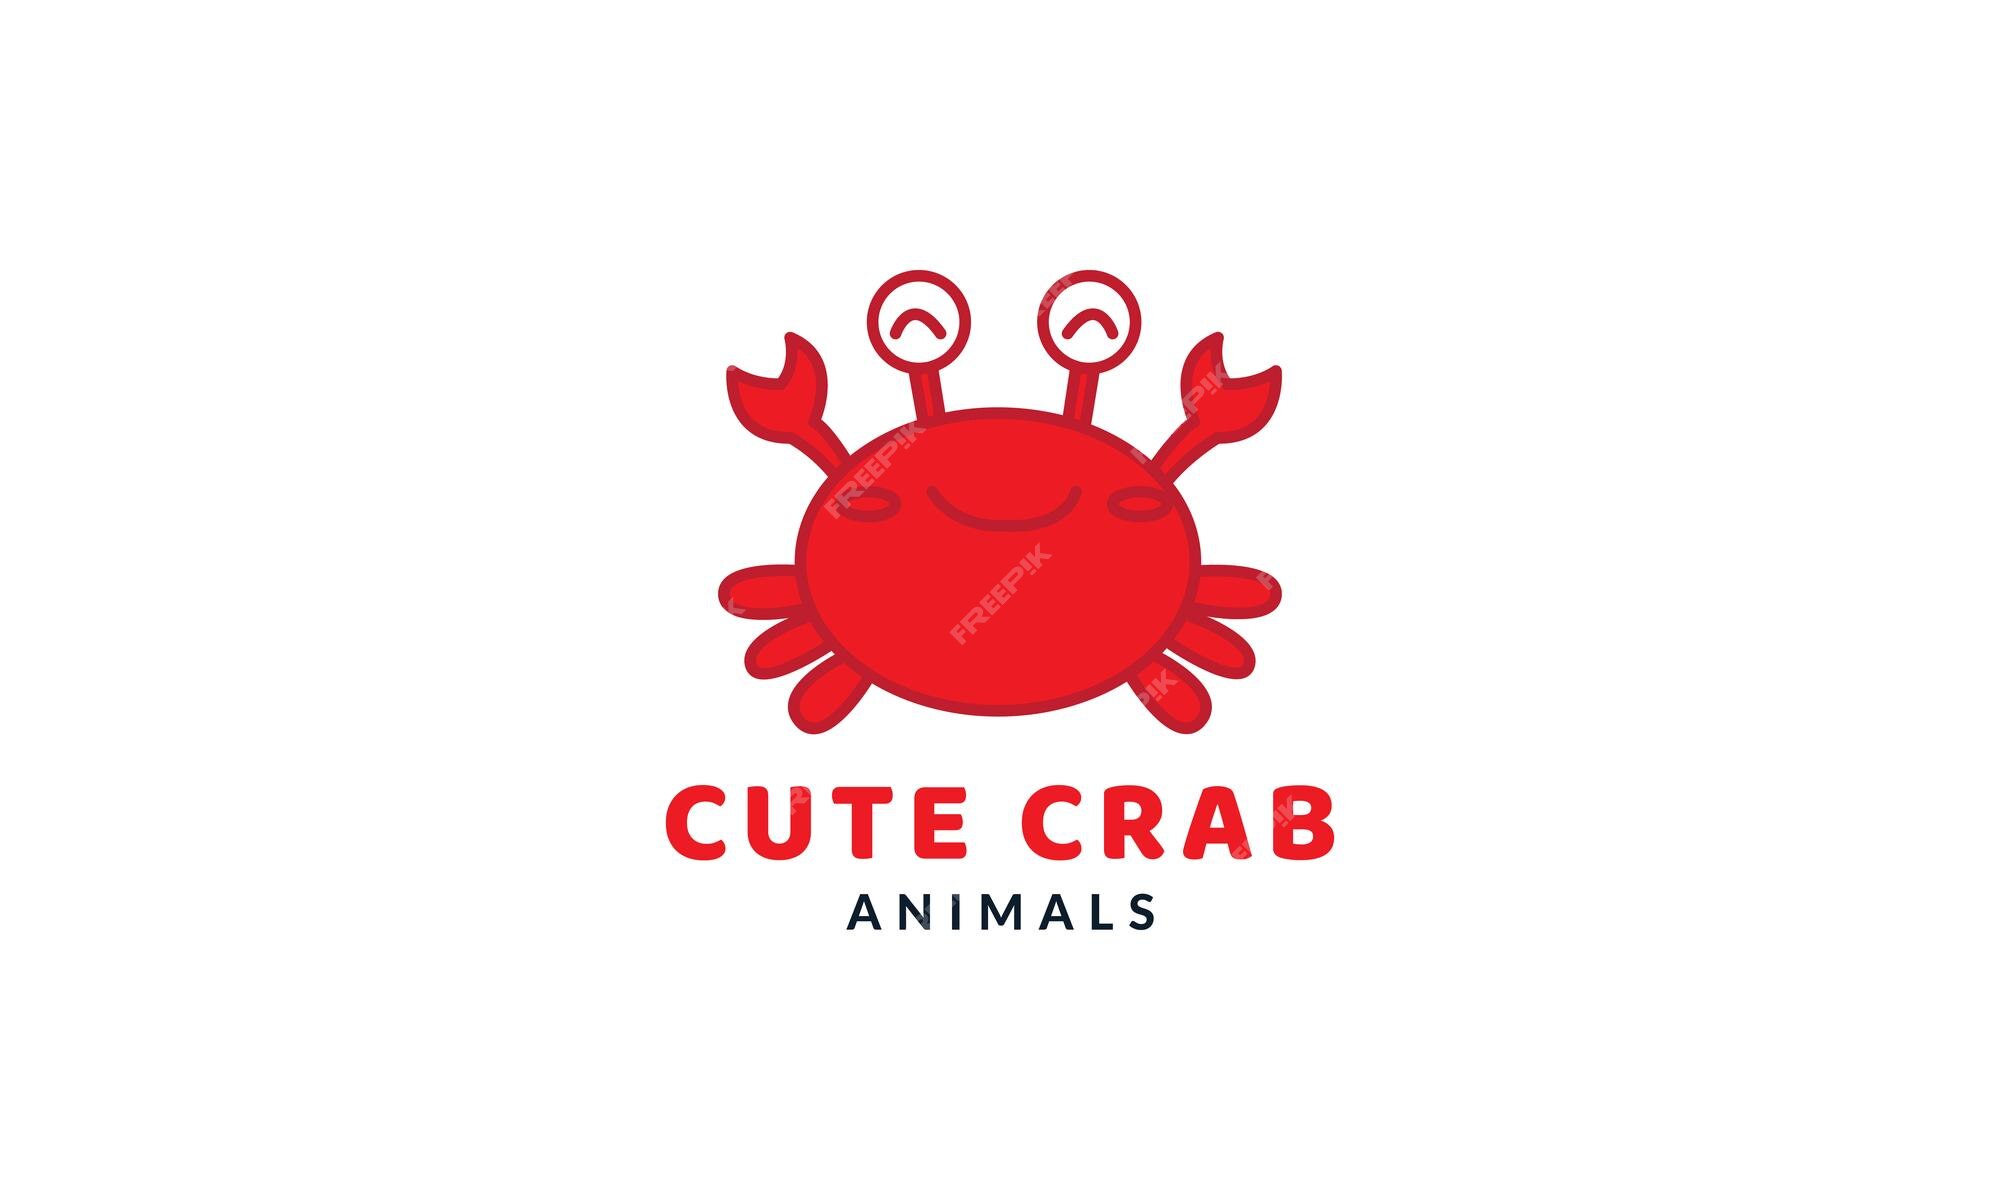 Premium Vector | Crab Red Smile Cute Cartoon Logo Vector Illustration